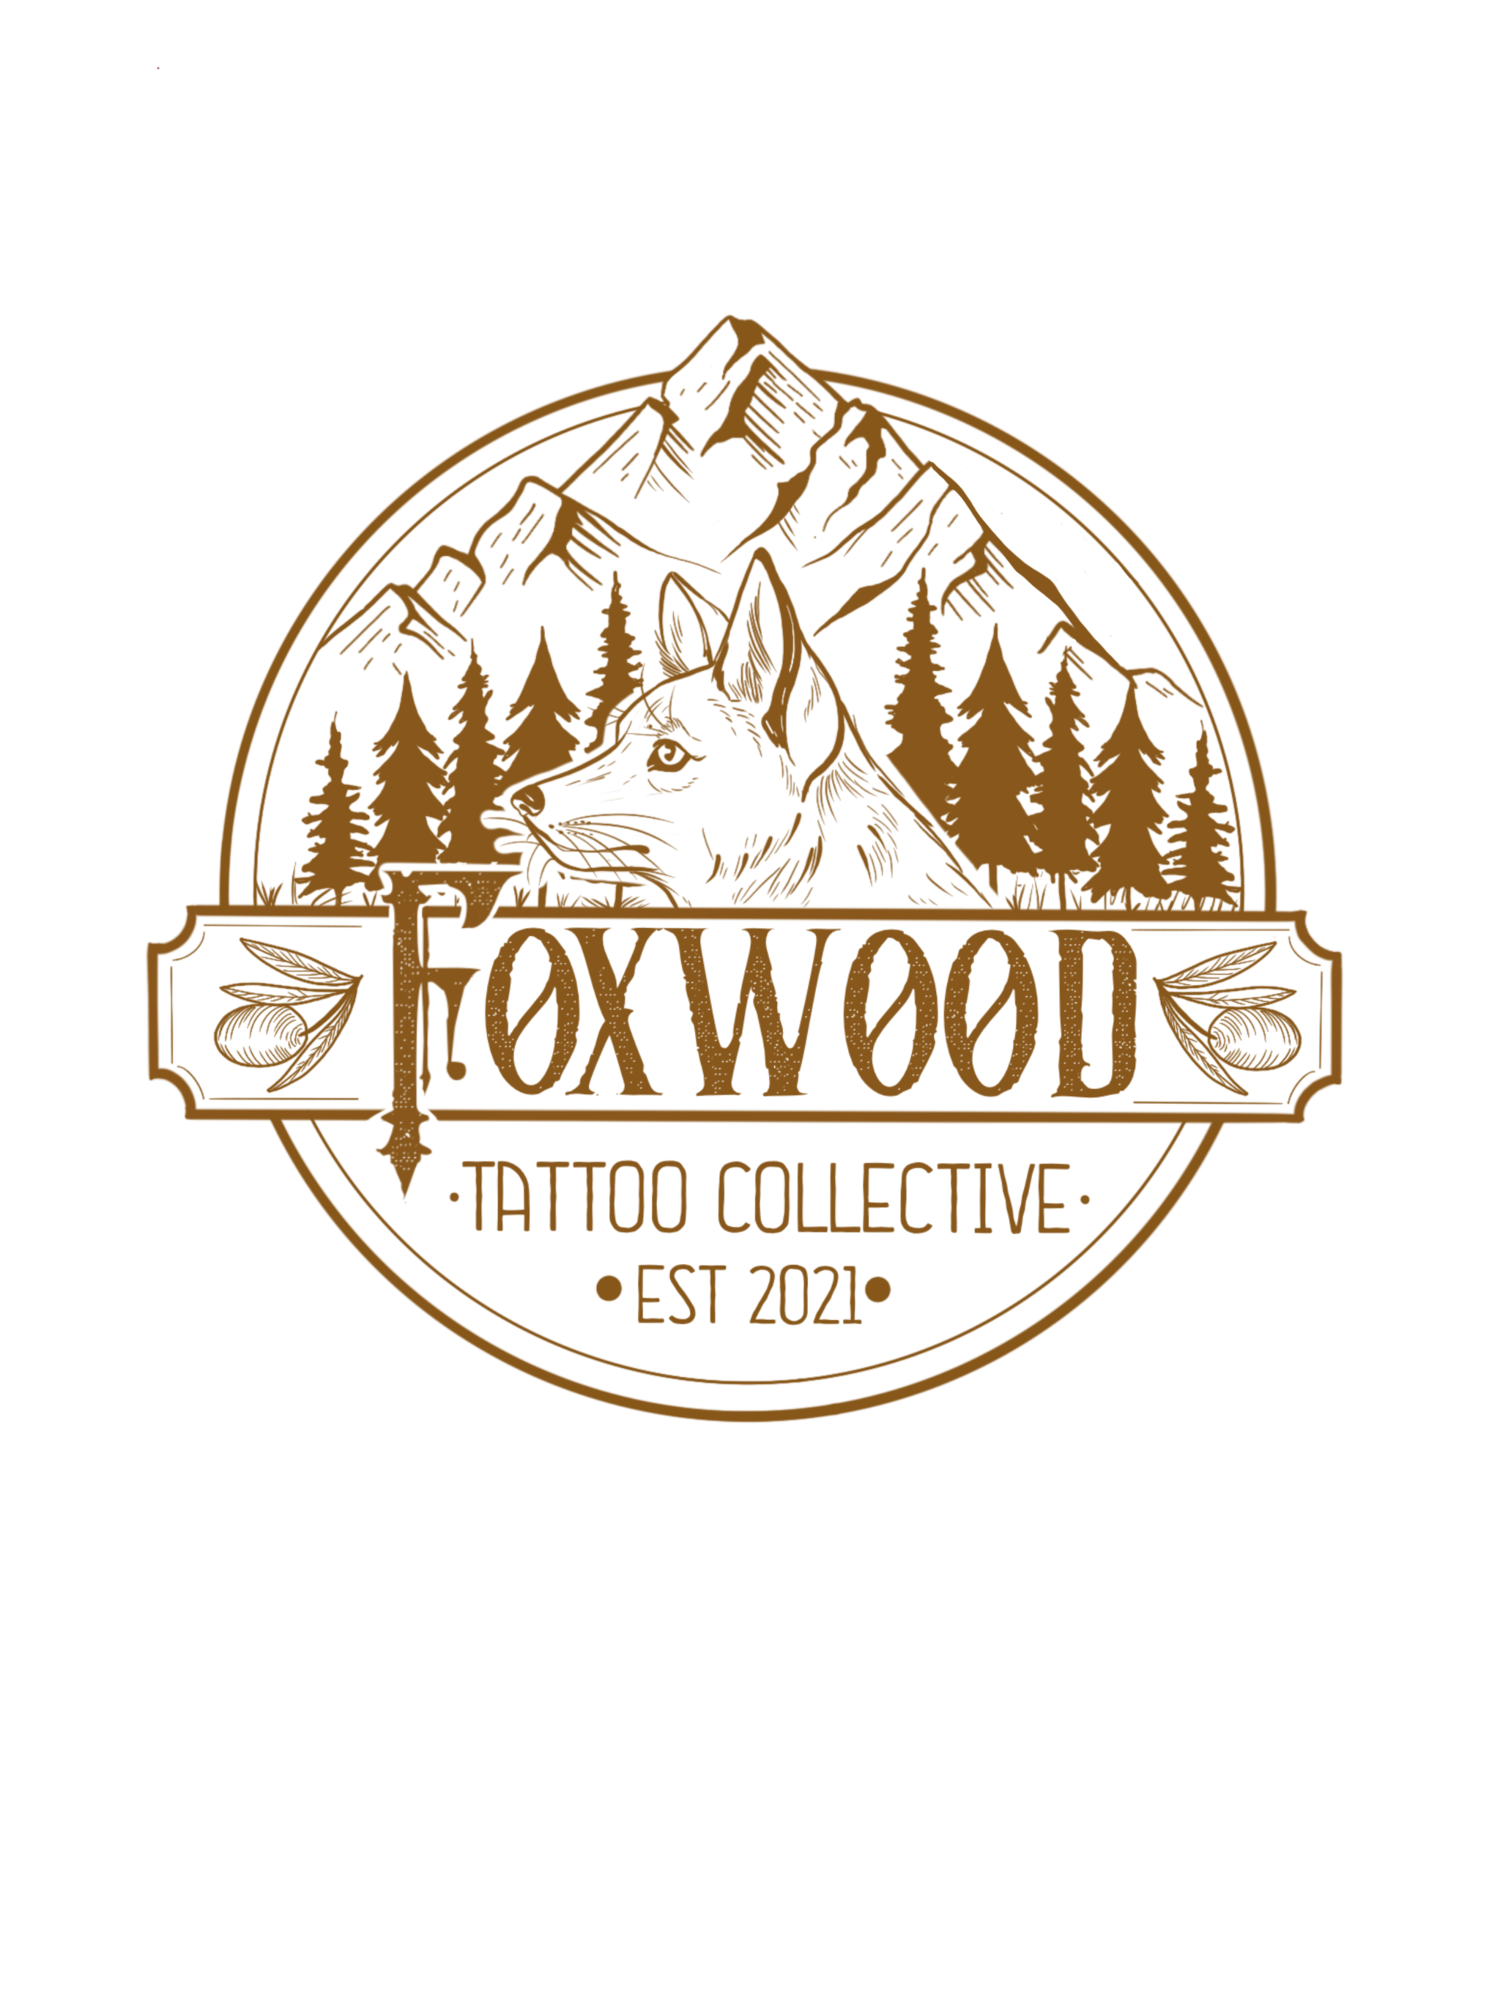 Foxwood Tattoo Collective 